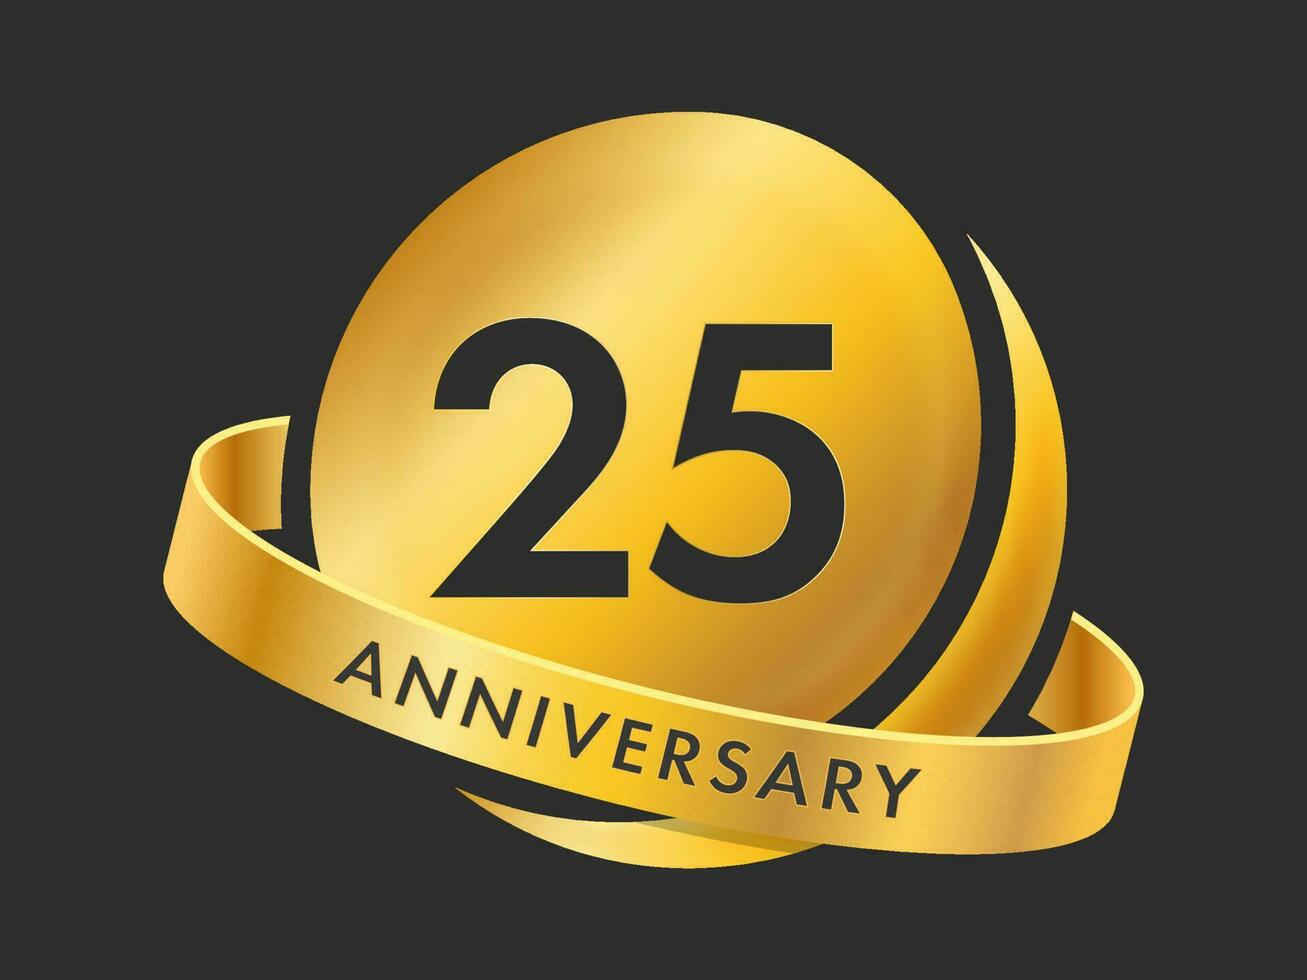 gyllene 25:e år årsdag emblem logotyp på svart bakgrund. vektor